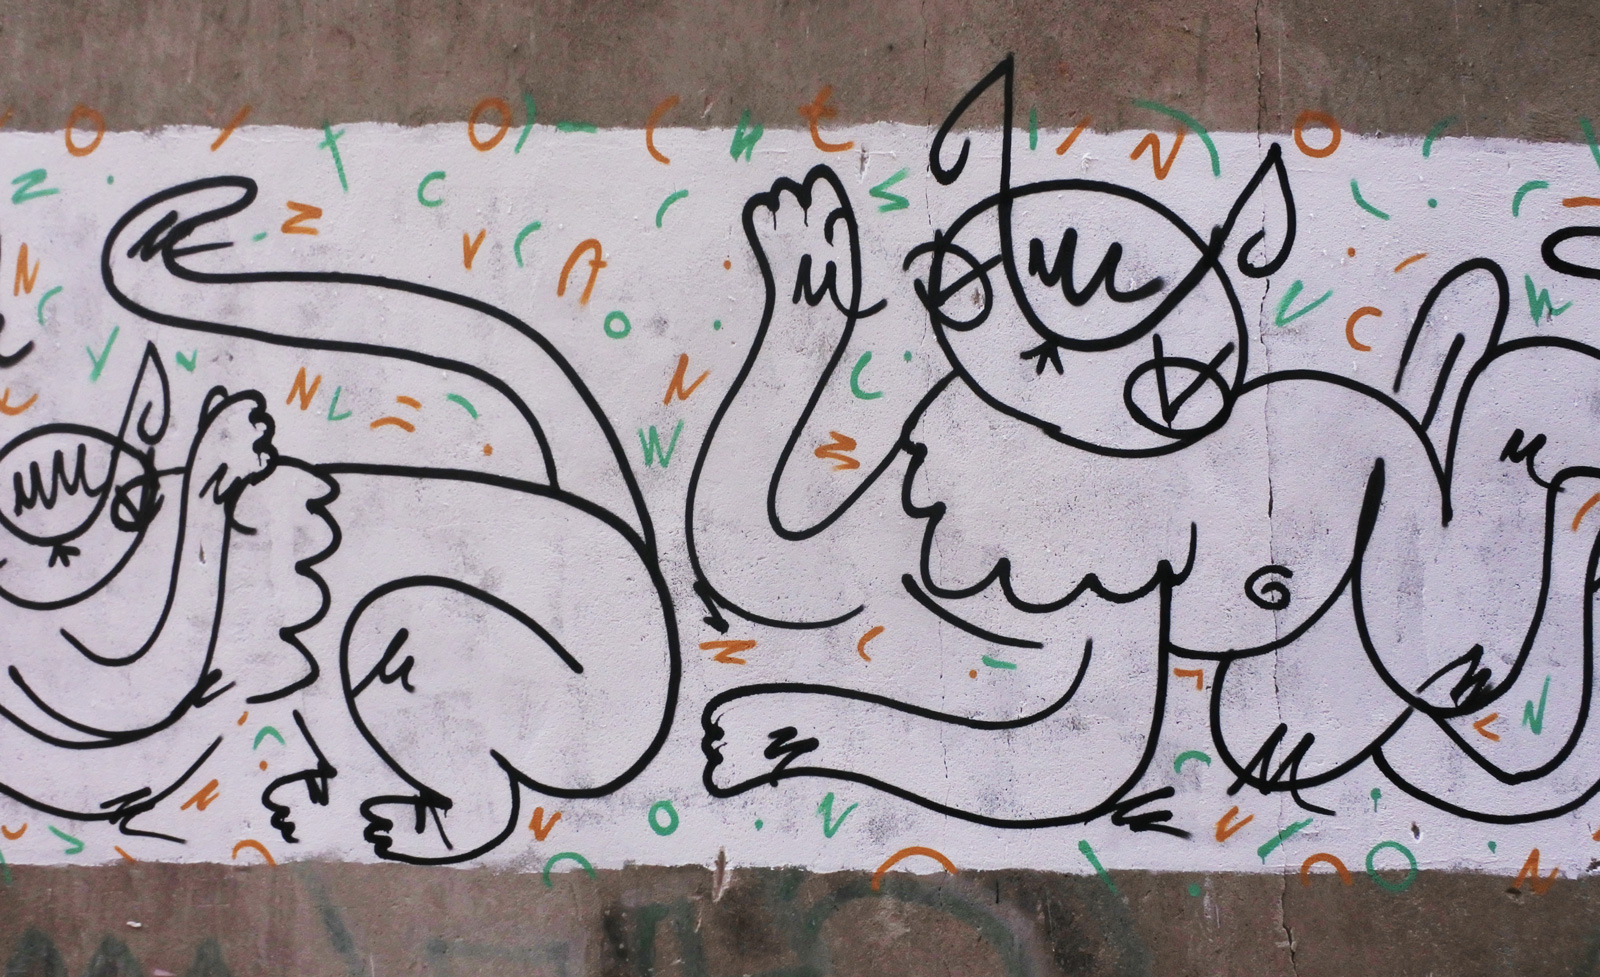 majgat street art supreme y